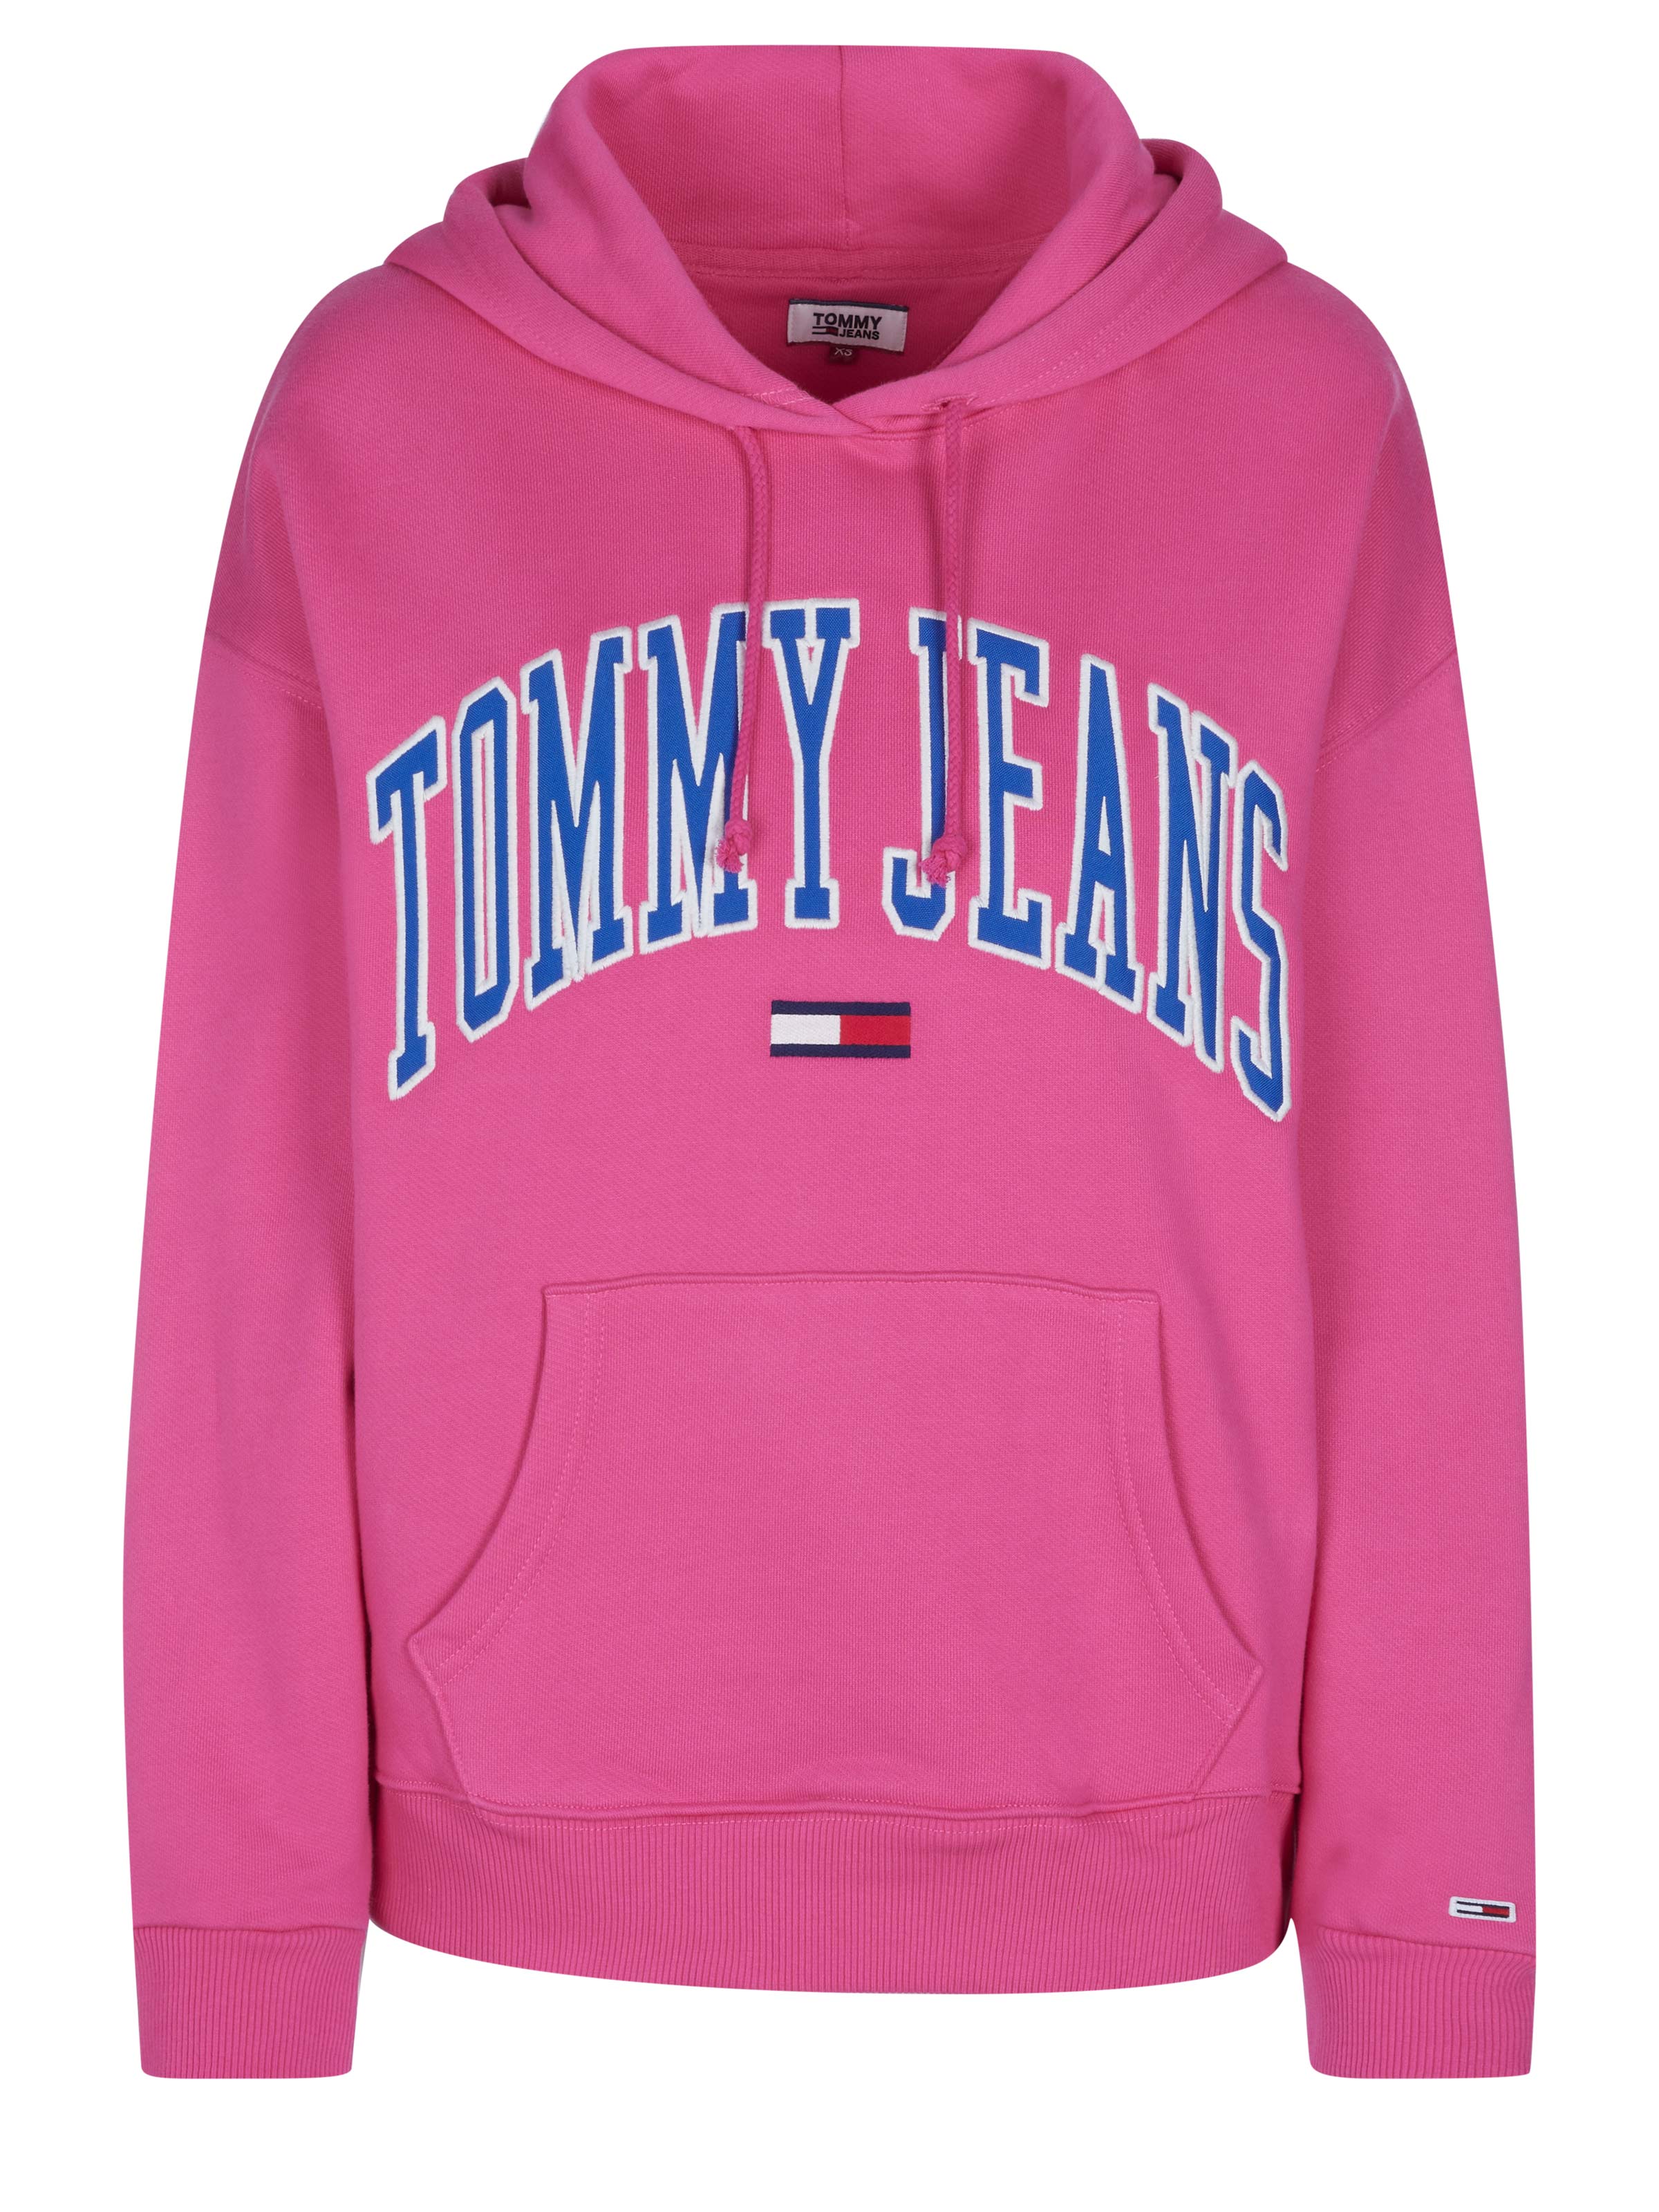 | Tommy SALE on Jeans Hilfiger Pink Fashionesta Pullover